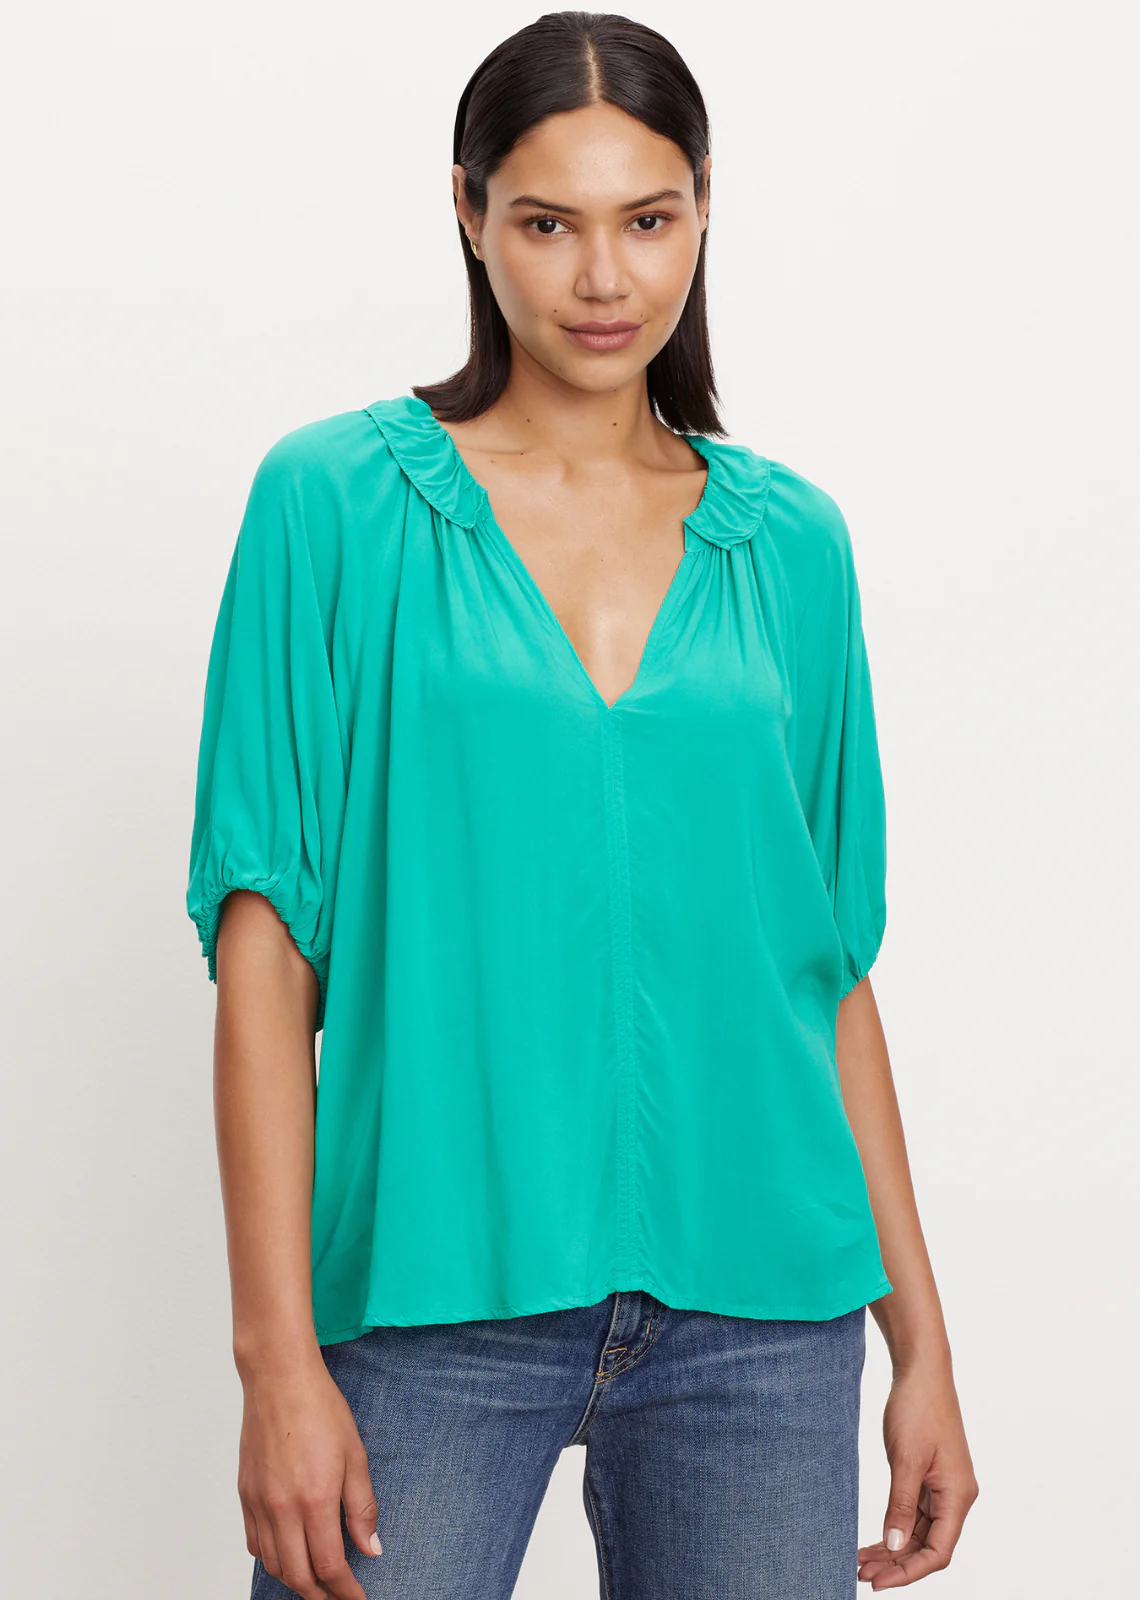 Velvet Alegra Blouse - Emerald Clothing - Tops - Shirts - Blouses - Blouses Top Price by Velvet | Grace the Boutique